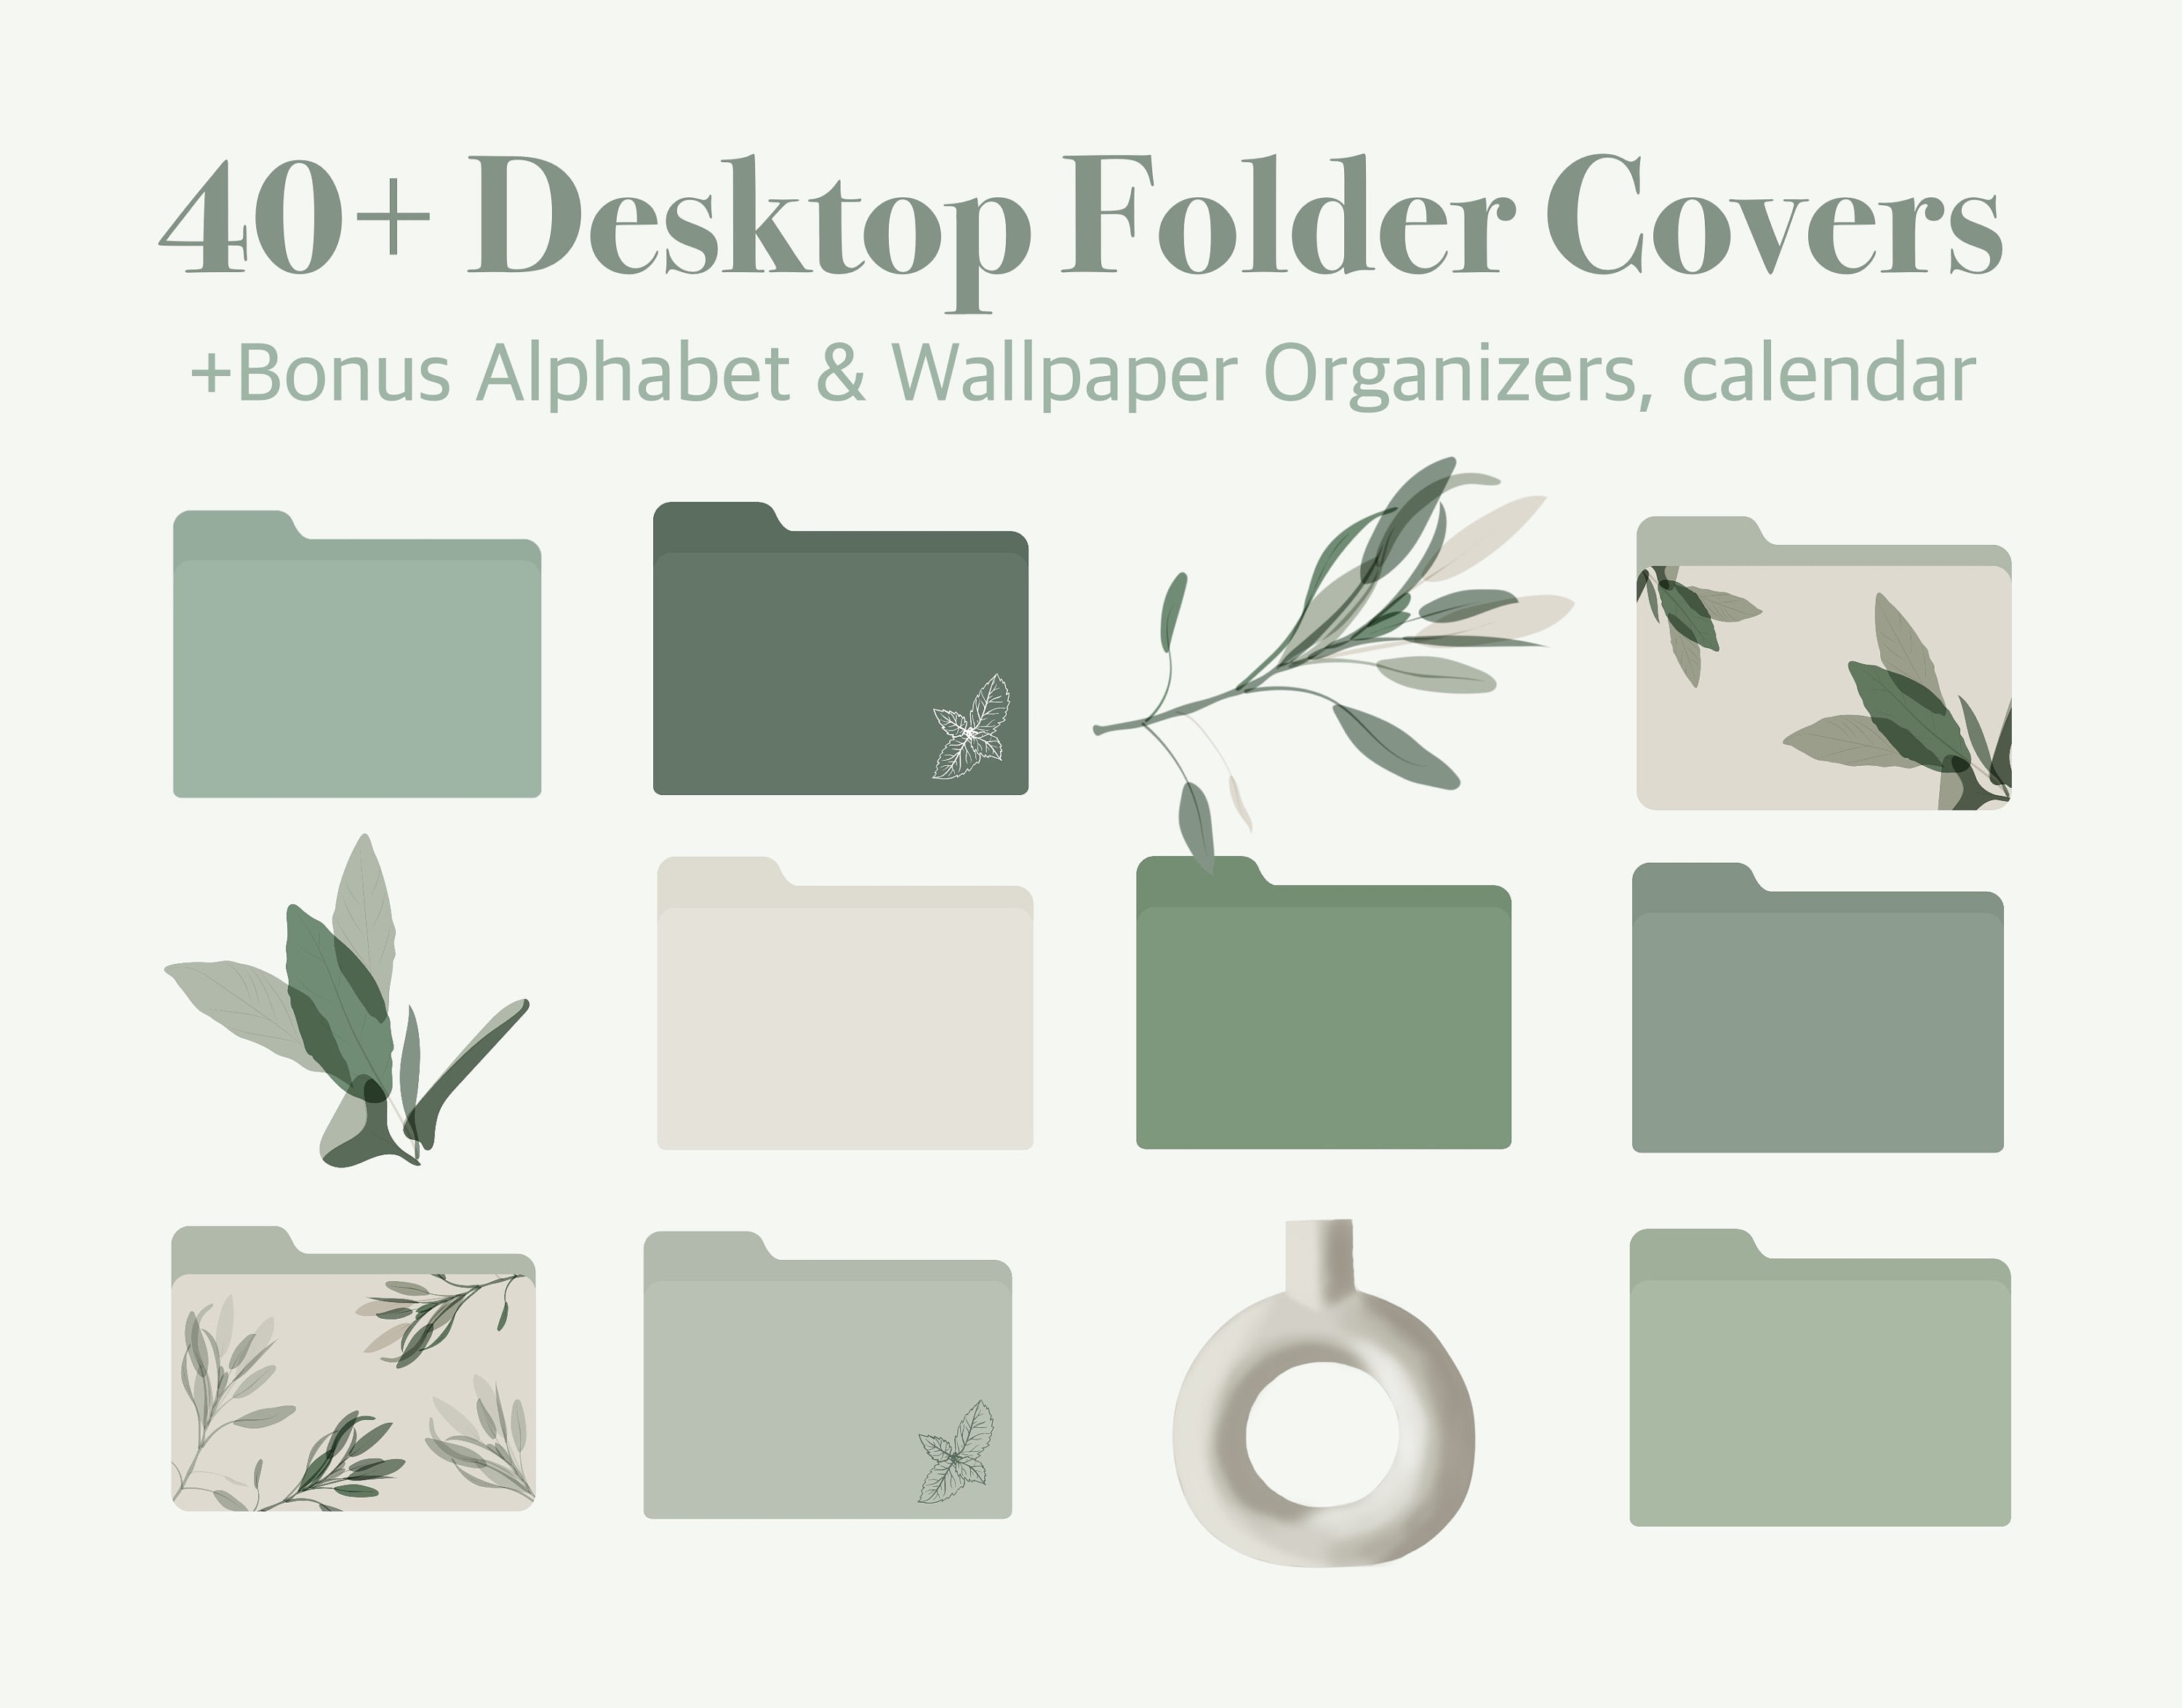 Folder green steam - Files & Folders Icons